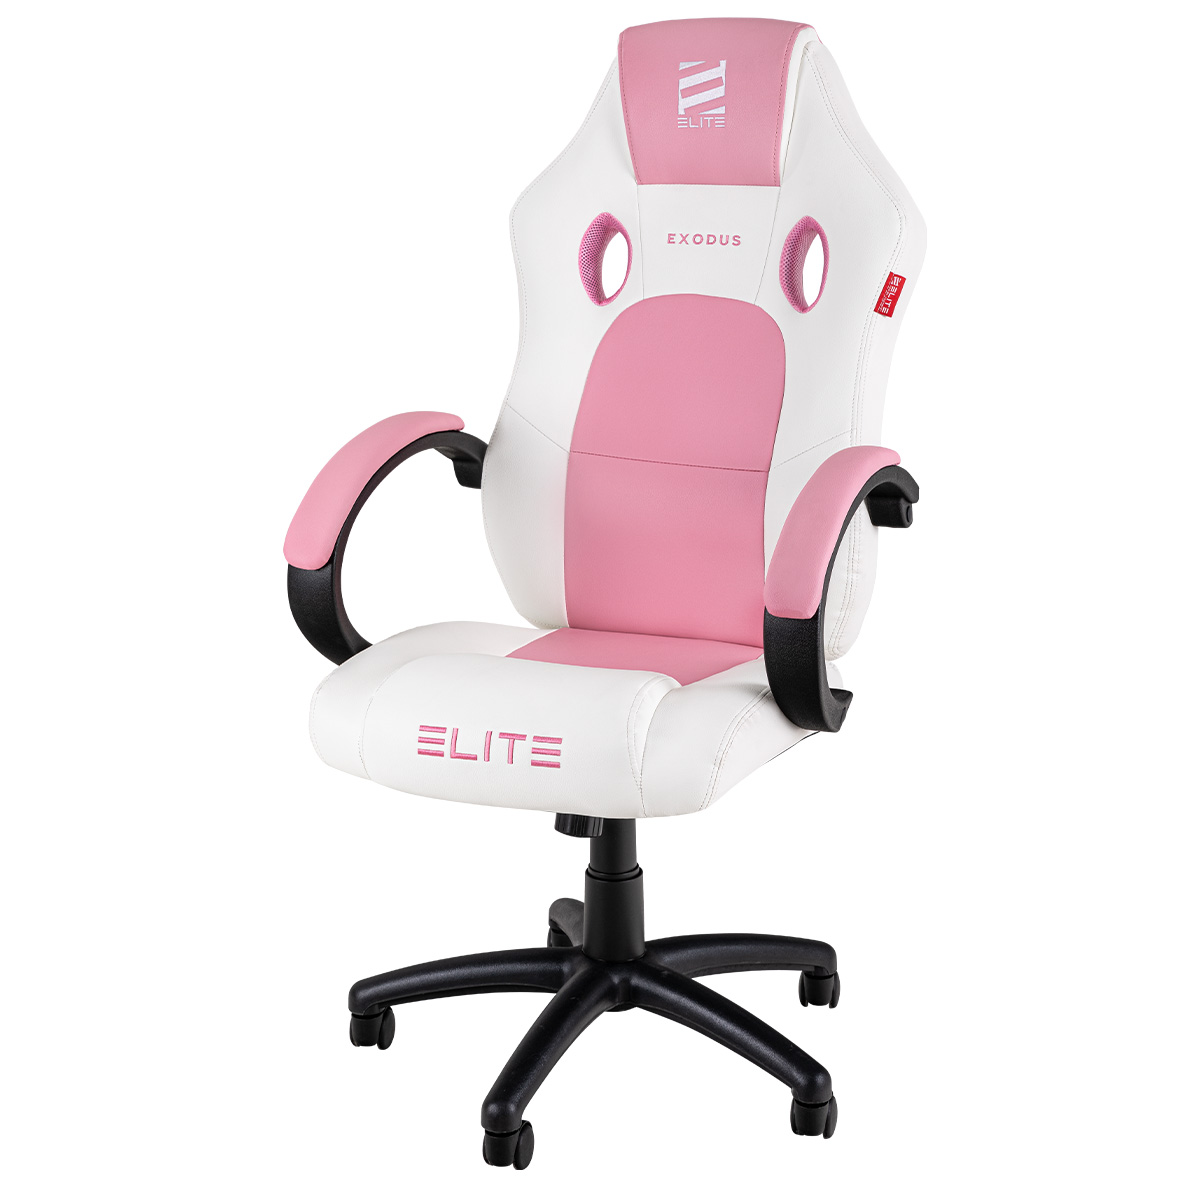 hohe Wippmechanik, ELITE EXODUS, MG100 Weiß/Pink extra Stuhl, Armpolster, Rückenlehne, Memory-Schaum, Gaming